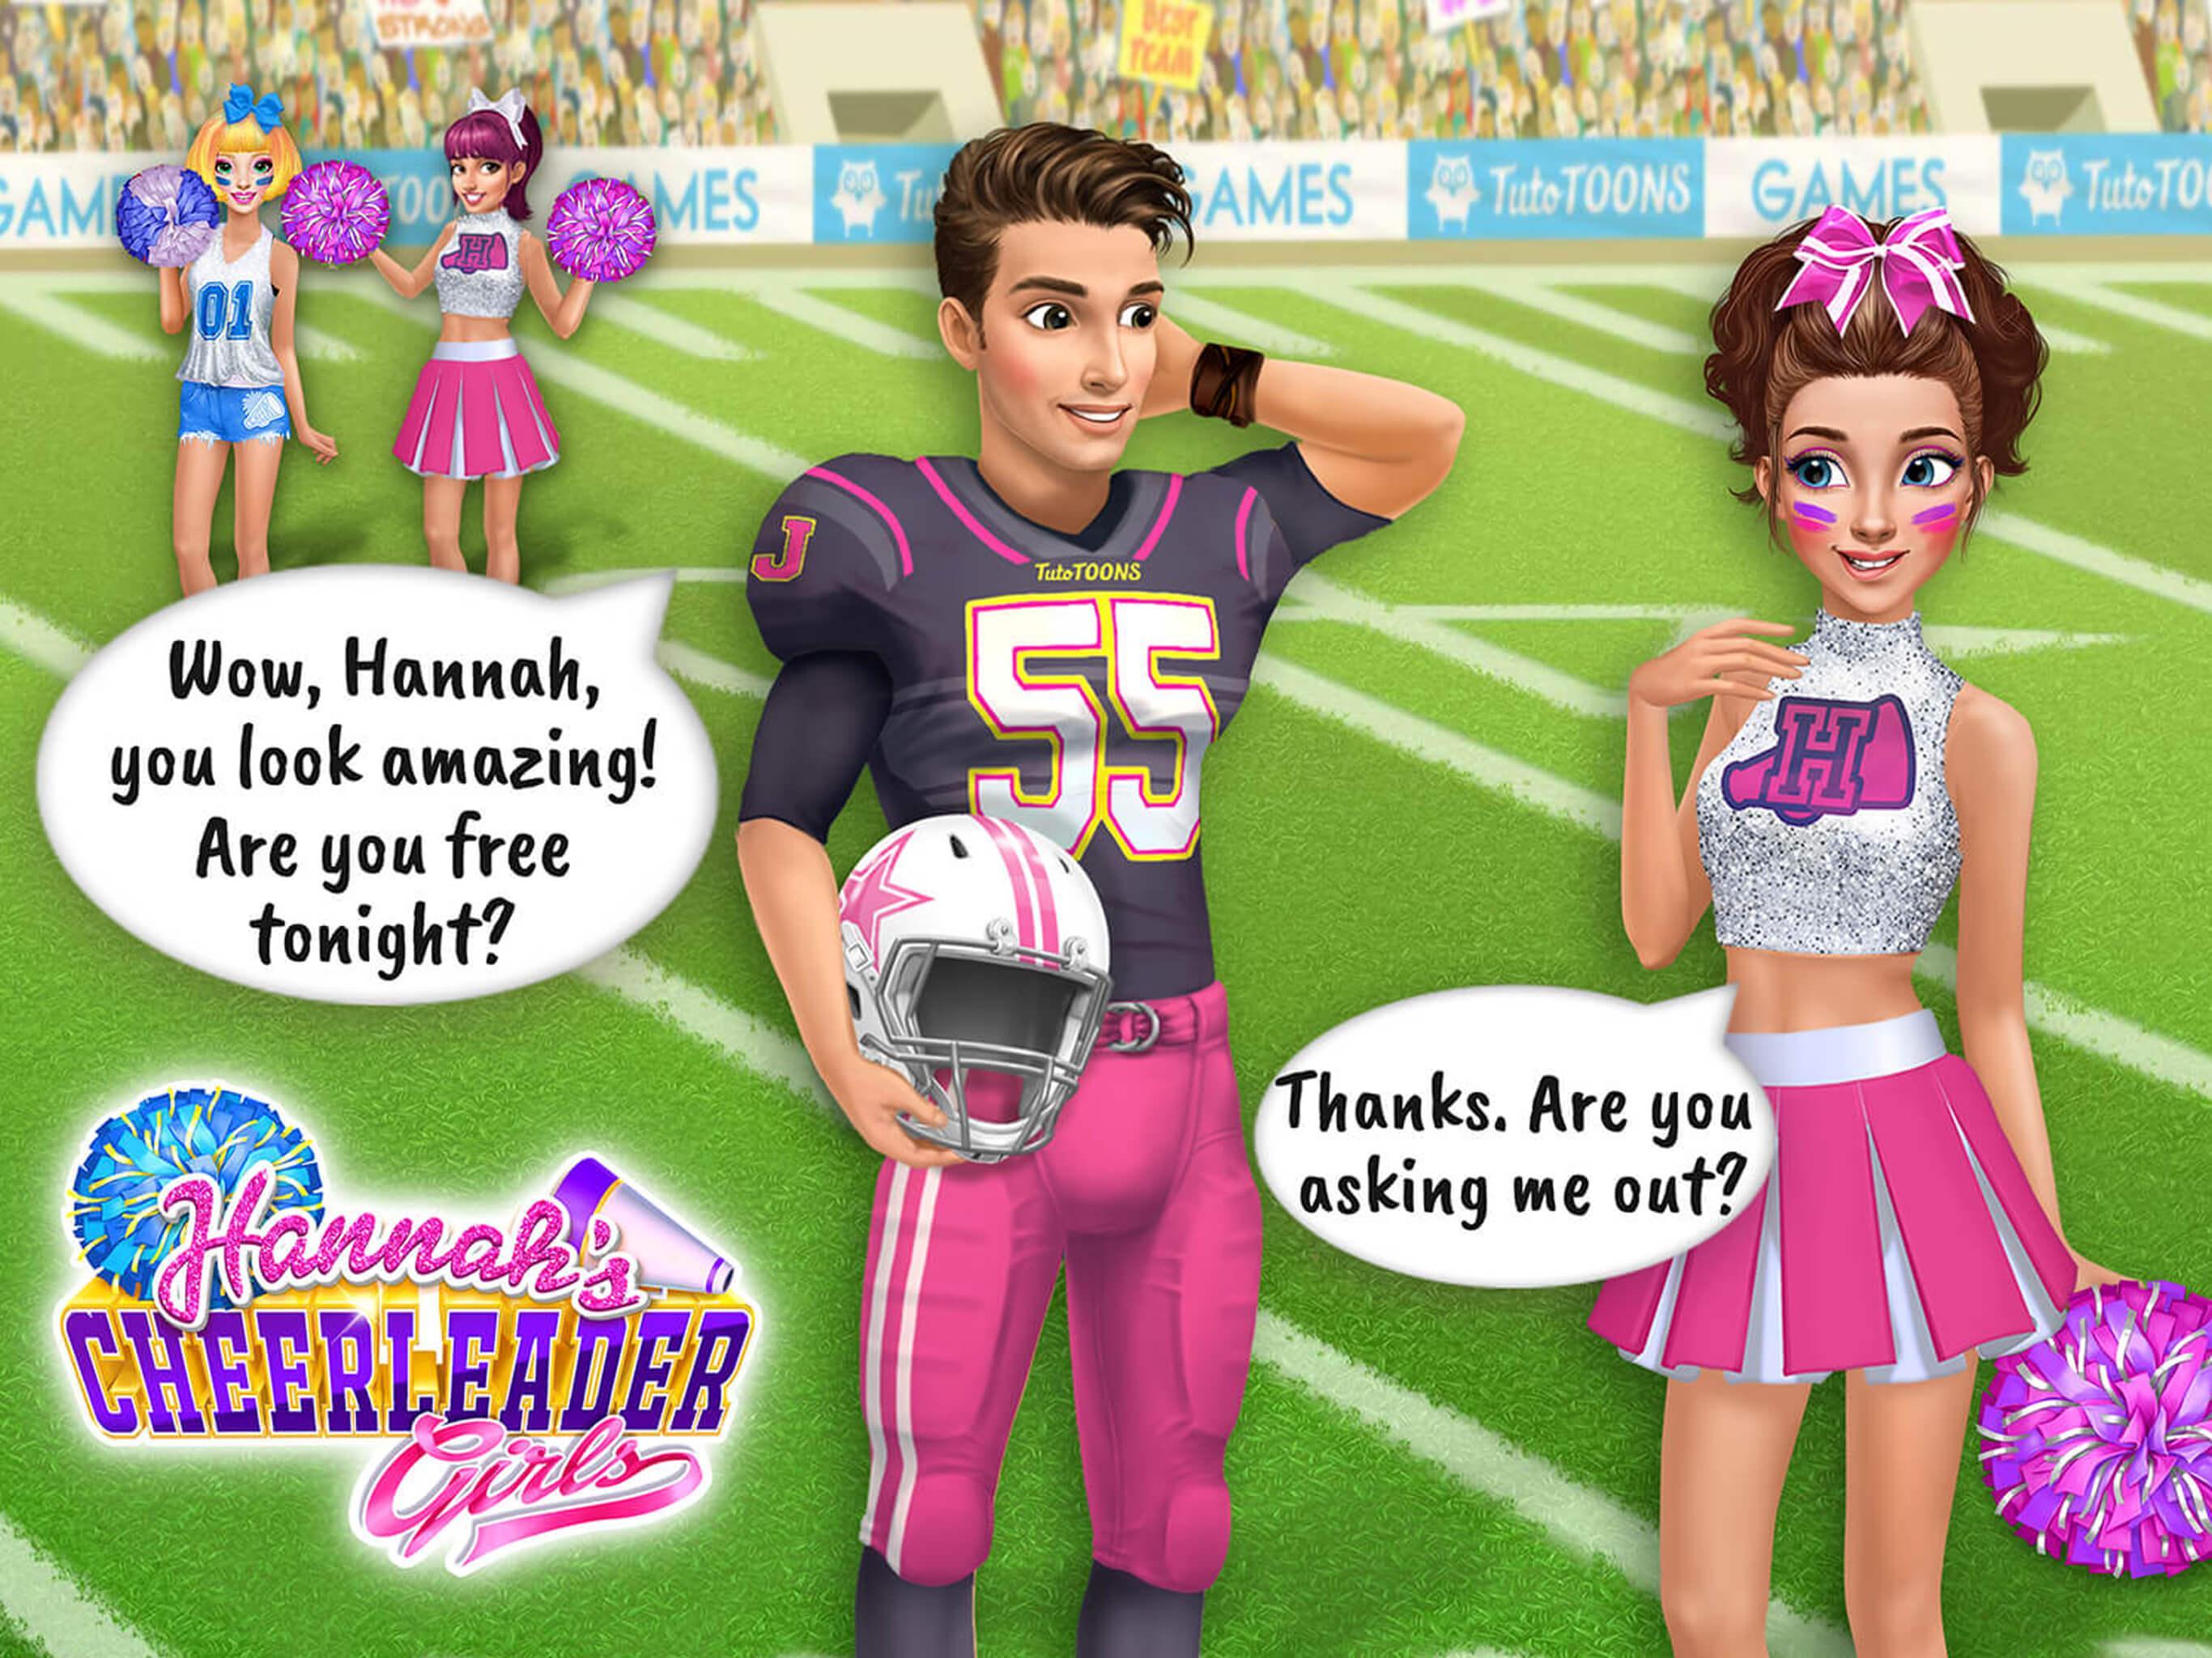 Hannah's Cheerleader Girlsのキャプチャ